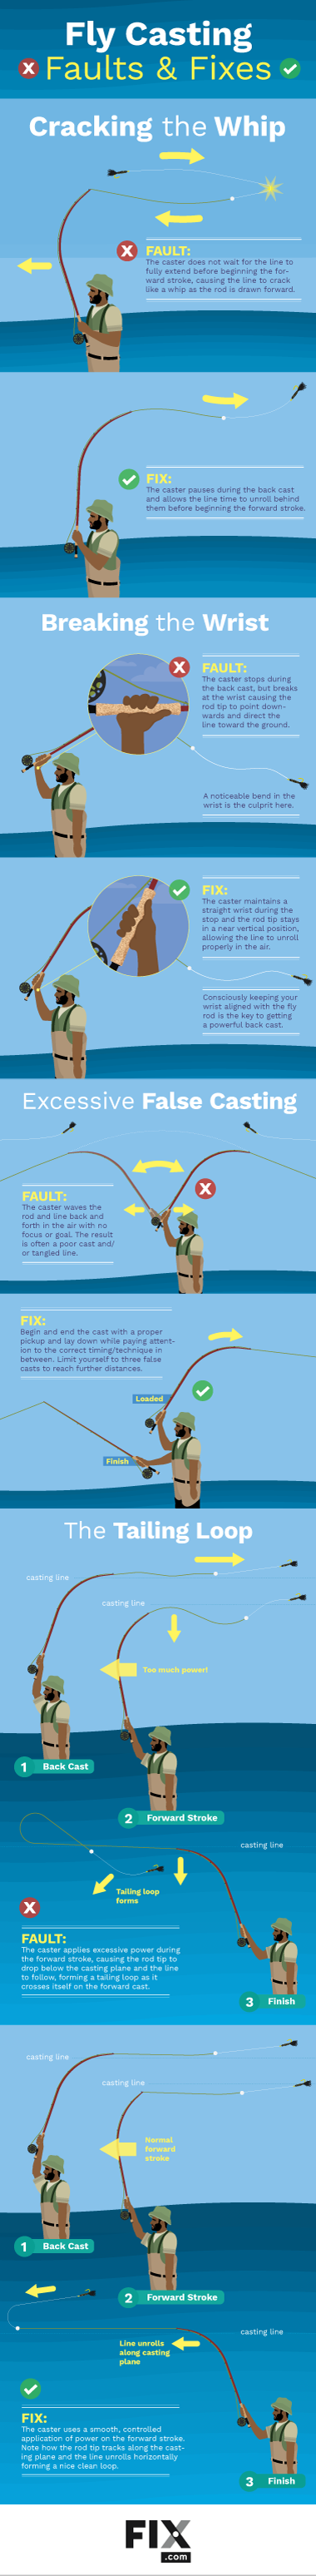 fly fishing tips